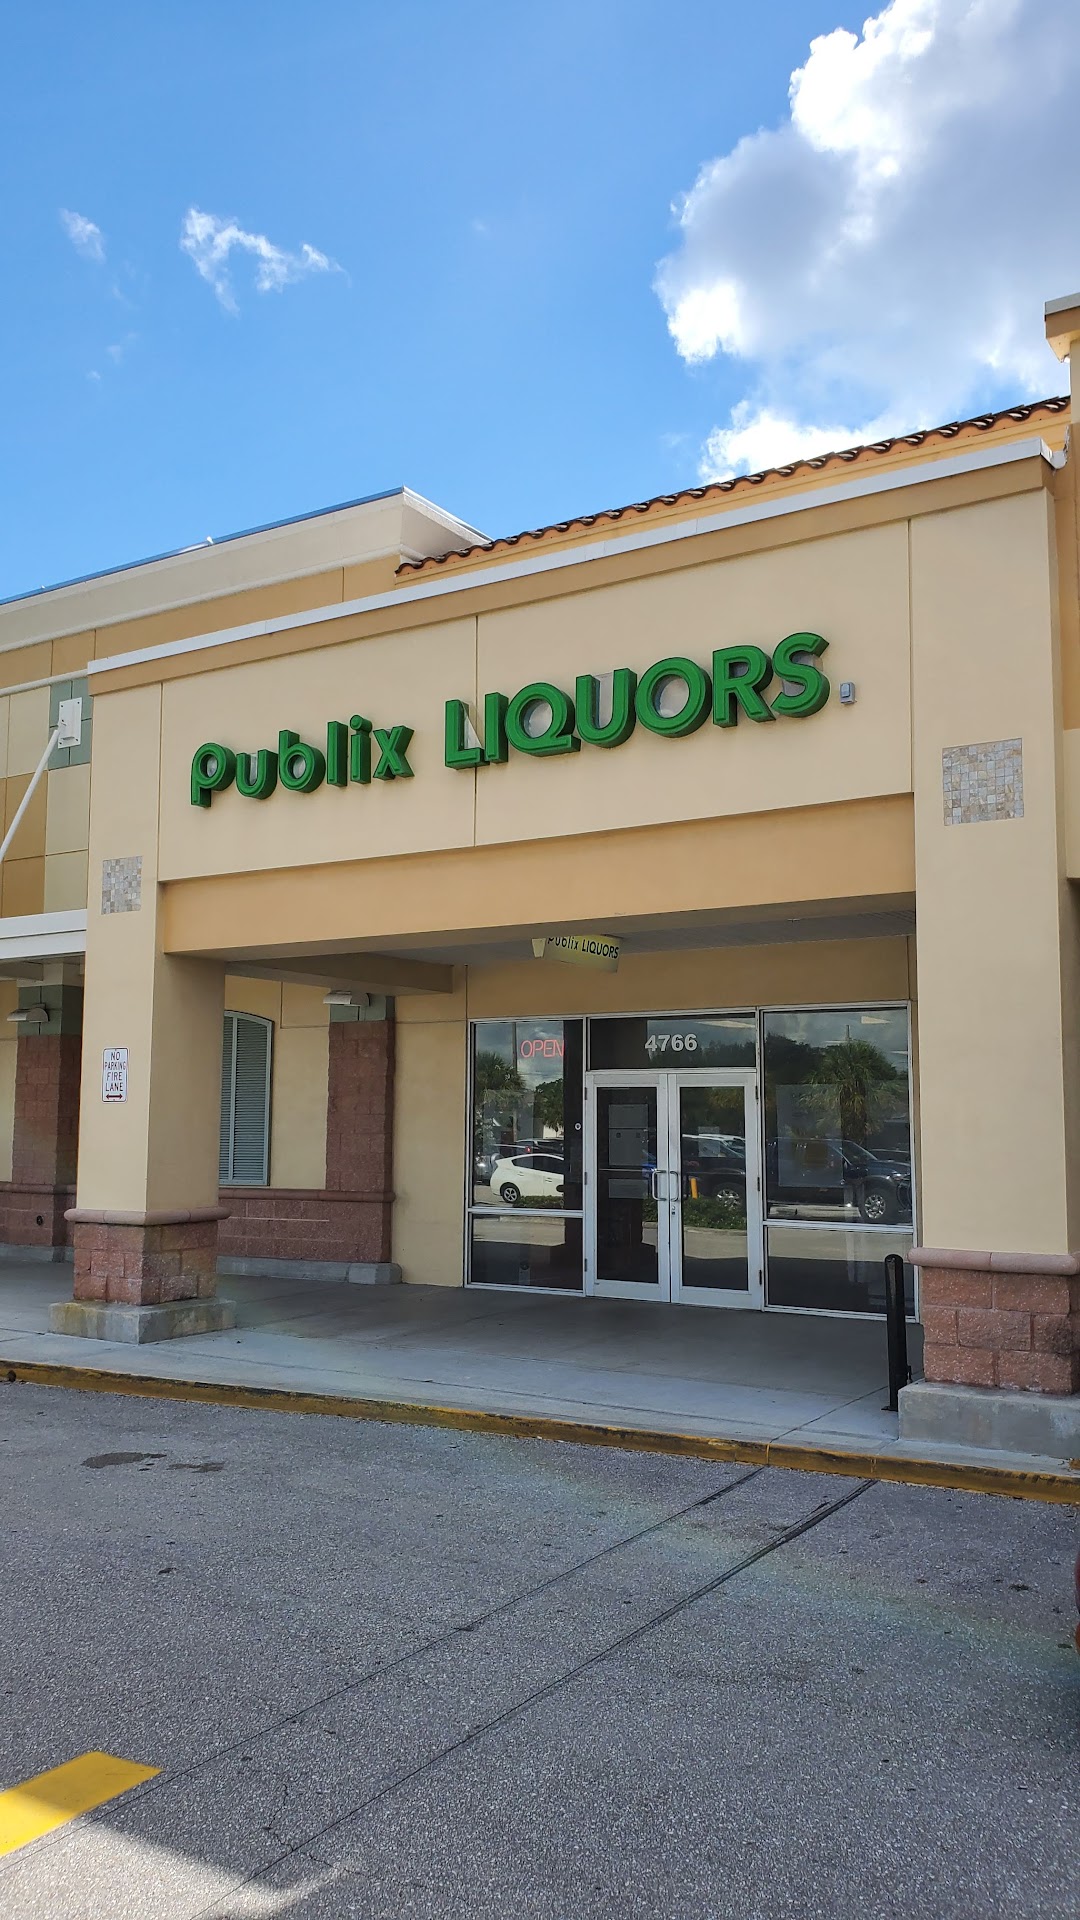 Publix Liquors at Boynton Lakes Plaza